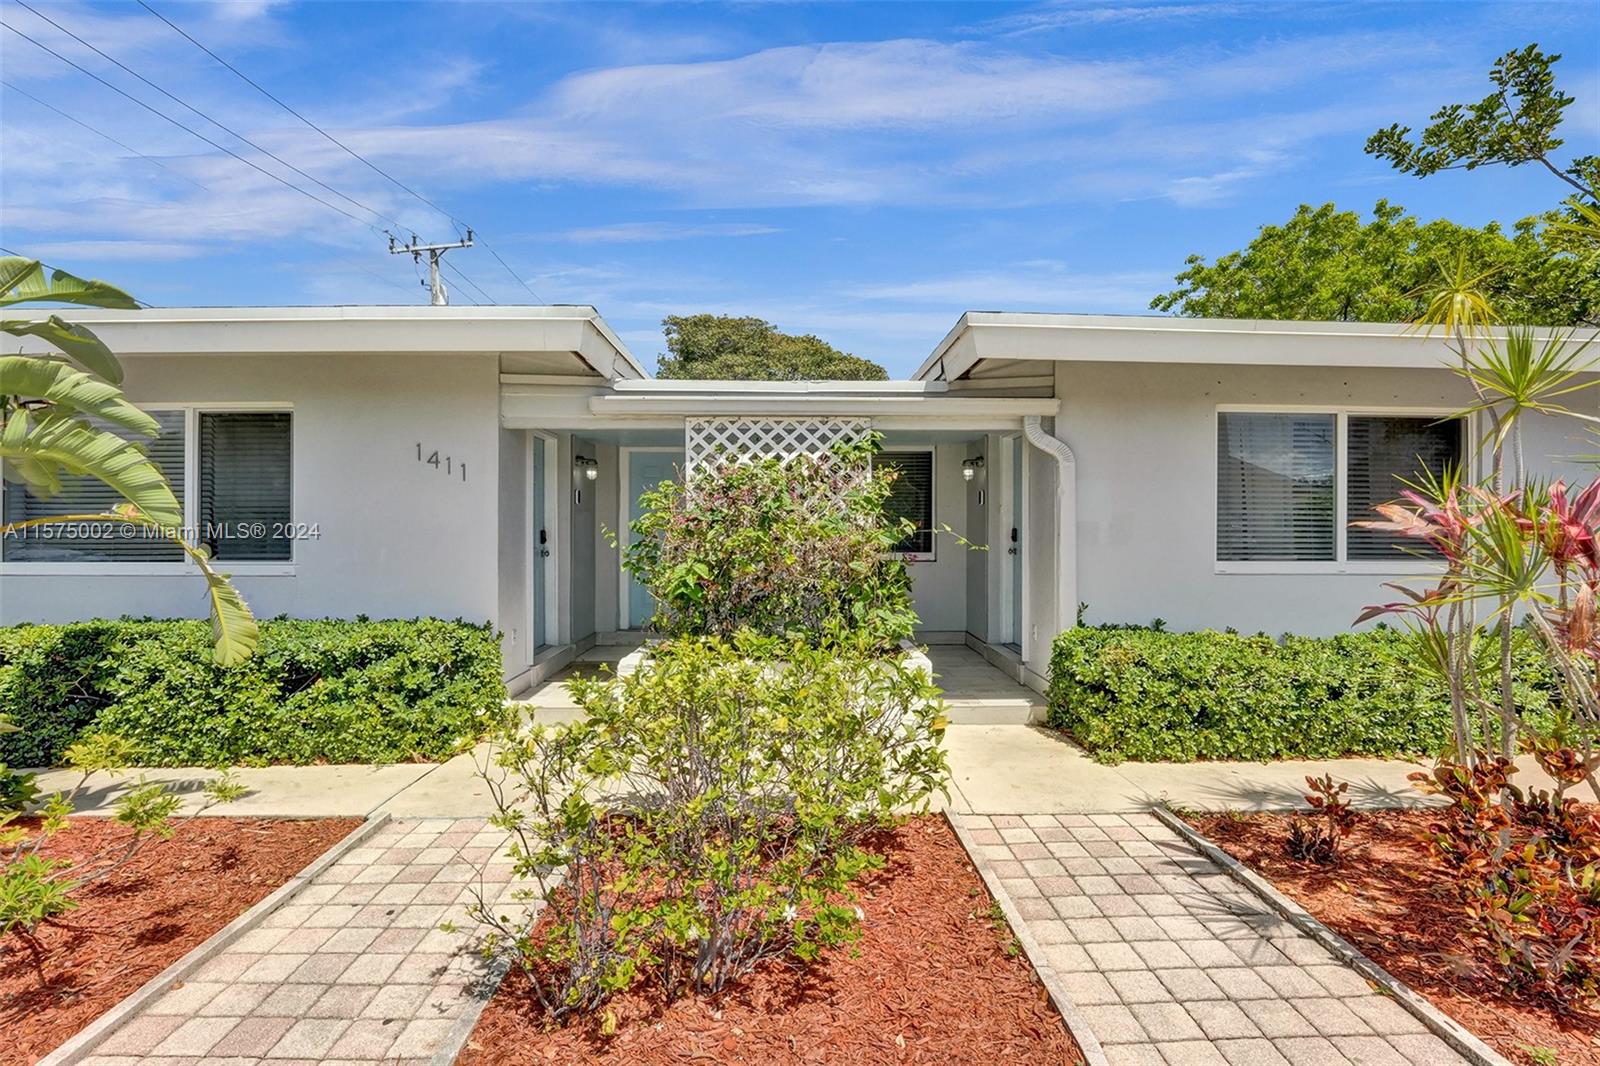 Rental Property at 1411 Ne 12th St, Fort Lauderdale, Broward County, Florida -  - $849,900 MO.